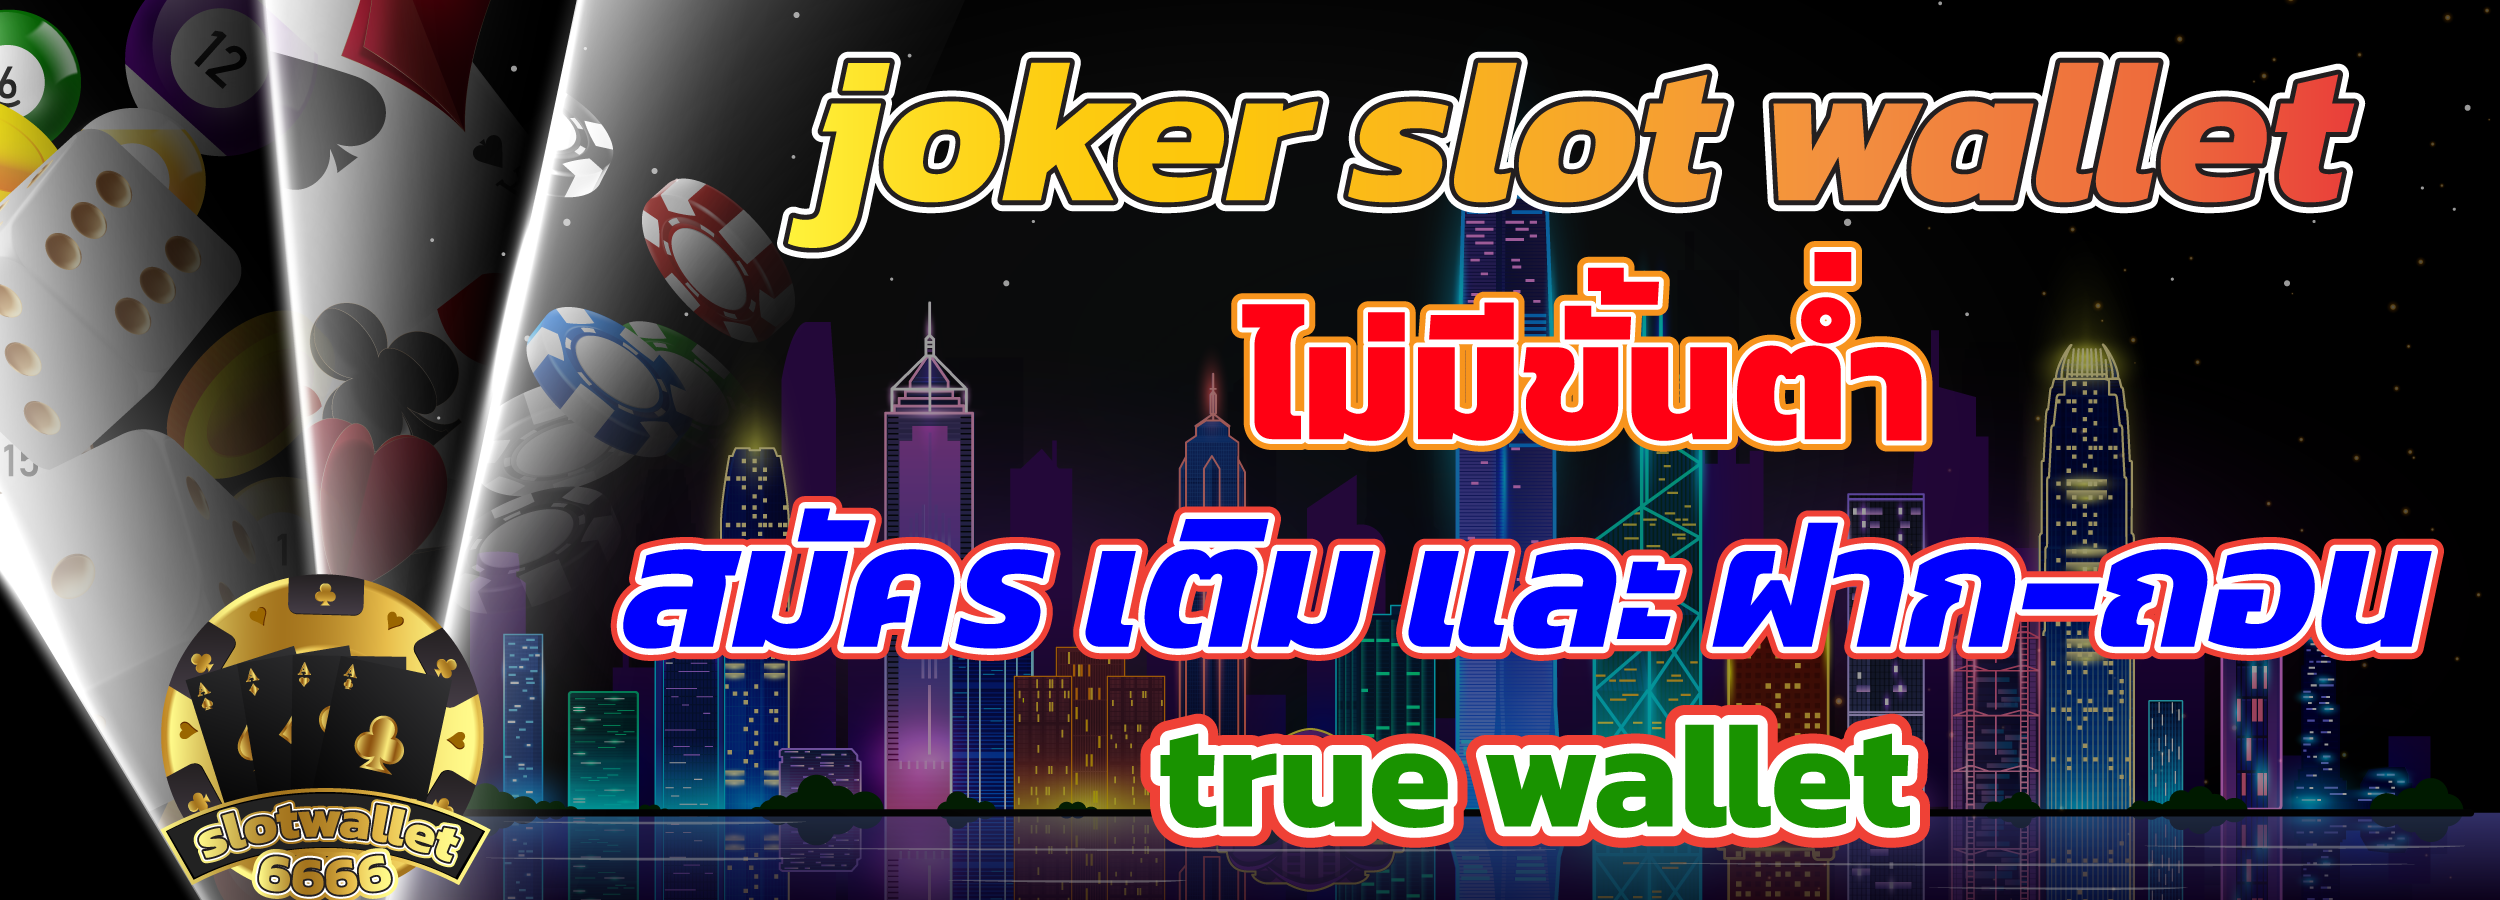 joker-slot-wallet